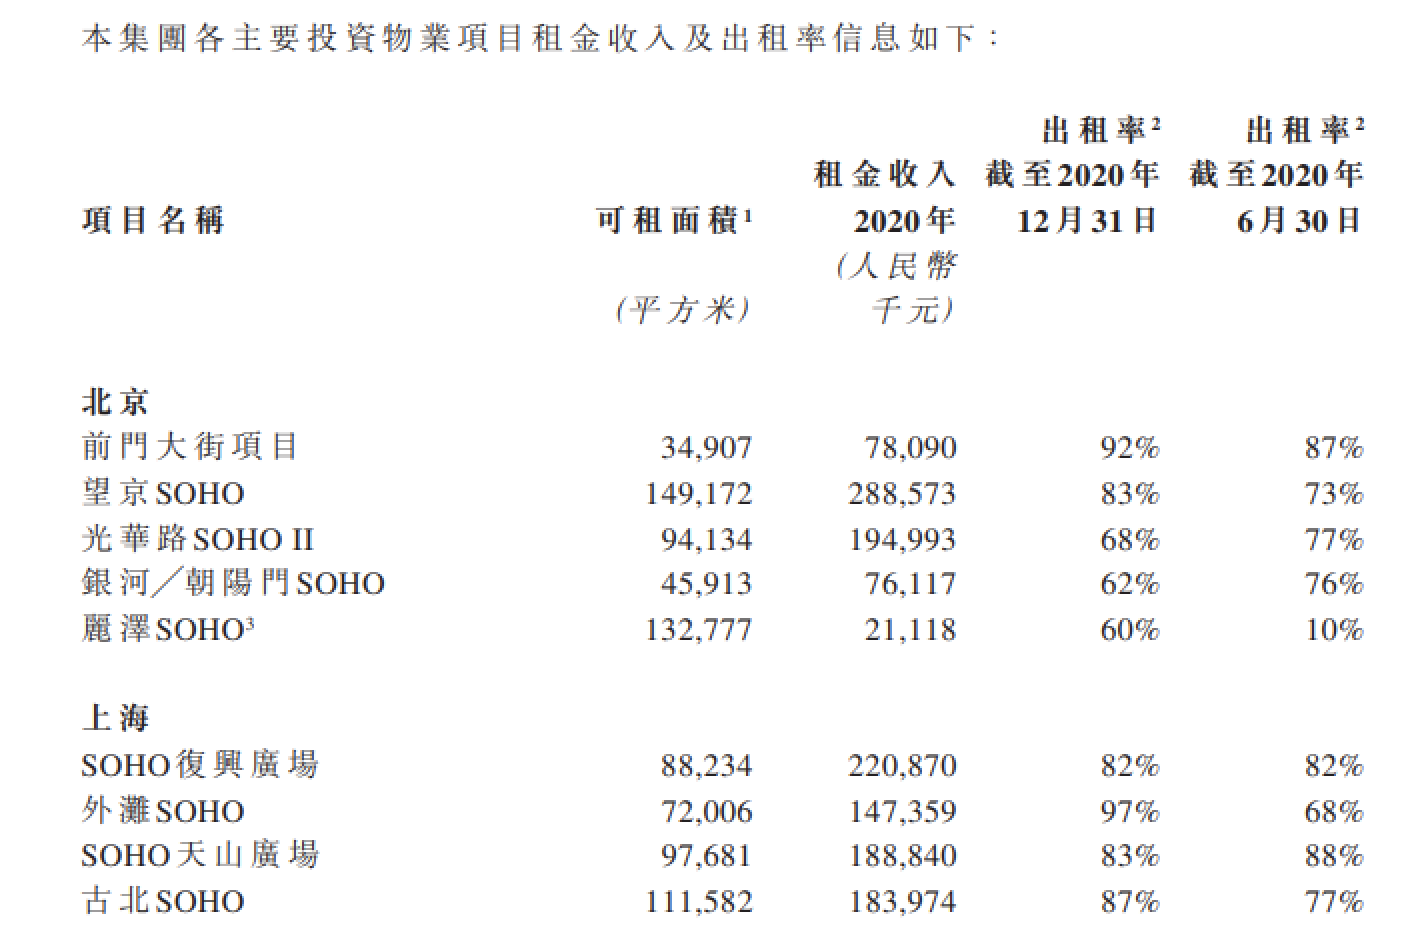 SOHO中国：2020年归属股东净利润5.35亿元 同比下降59.76%-中国网地产